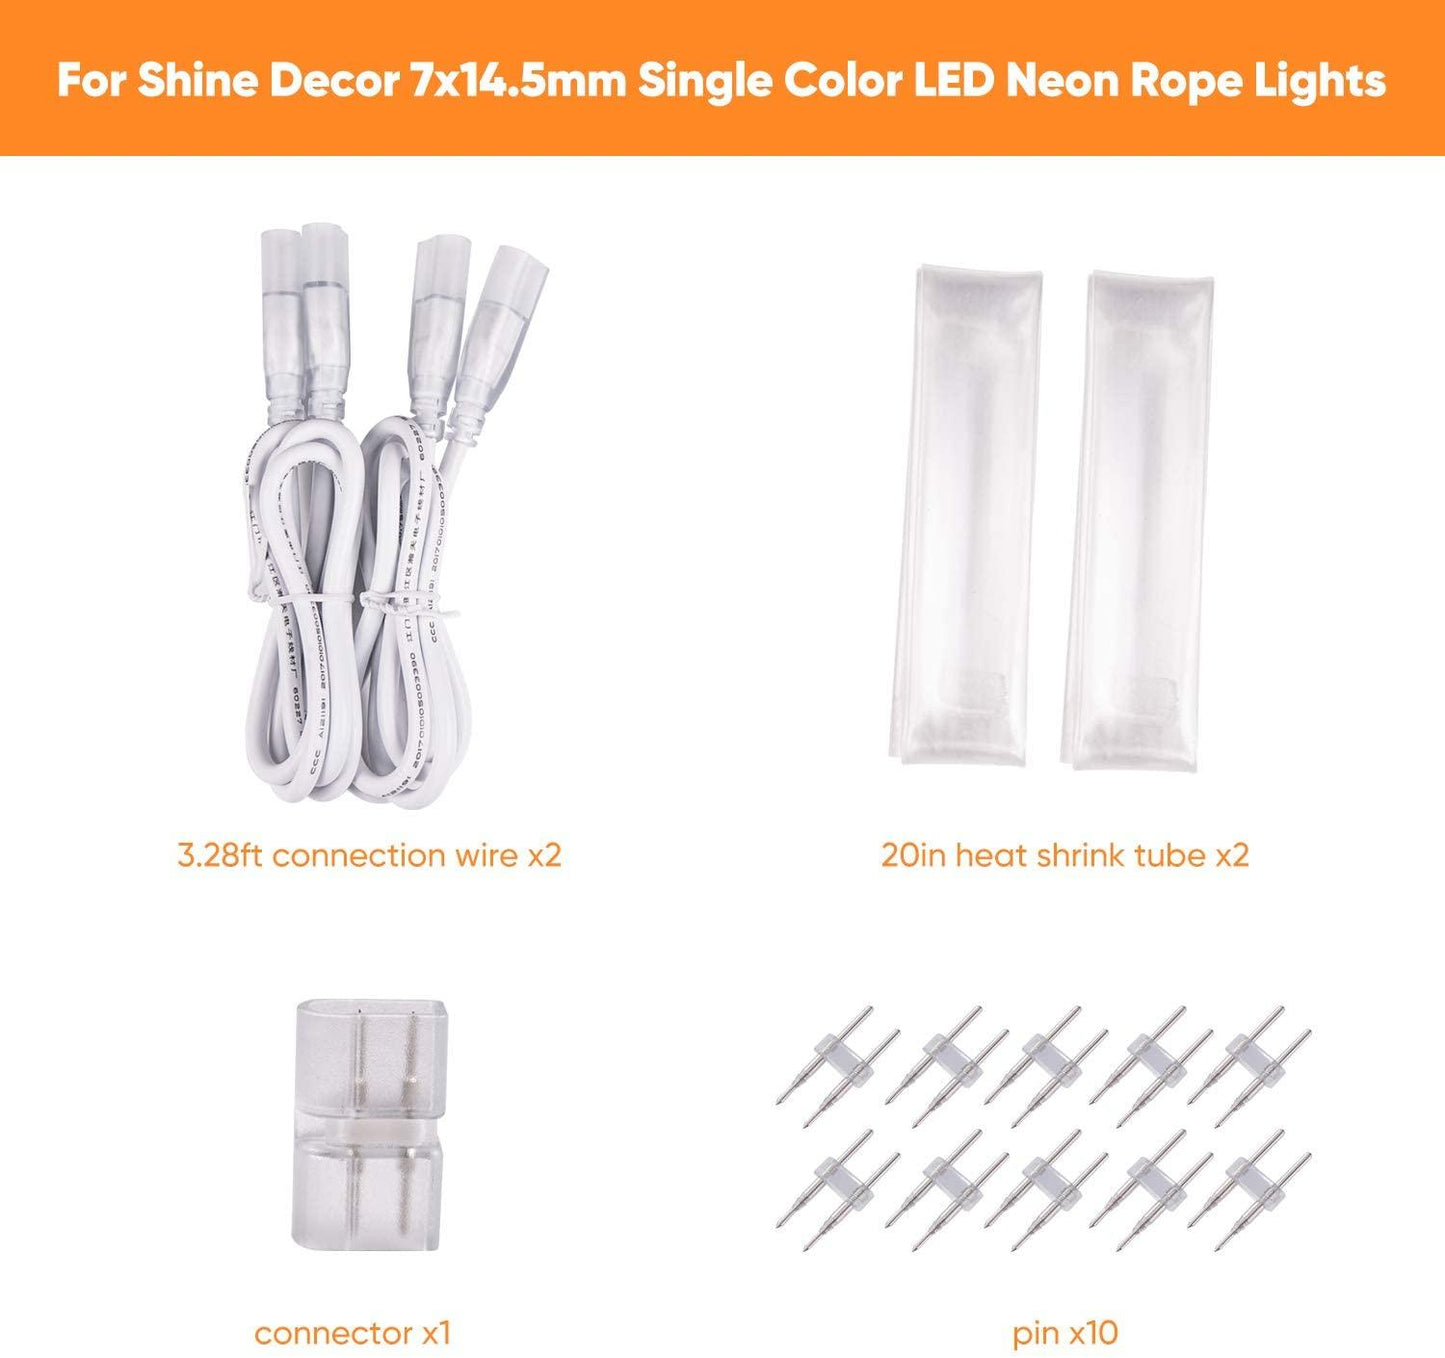 Connector Pack for 110V 7x14.5mm Led Neon Light-ProSelect Neon - Shine Decor